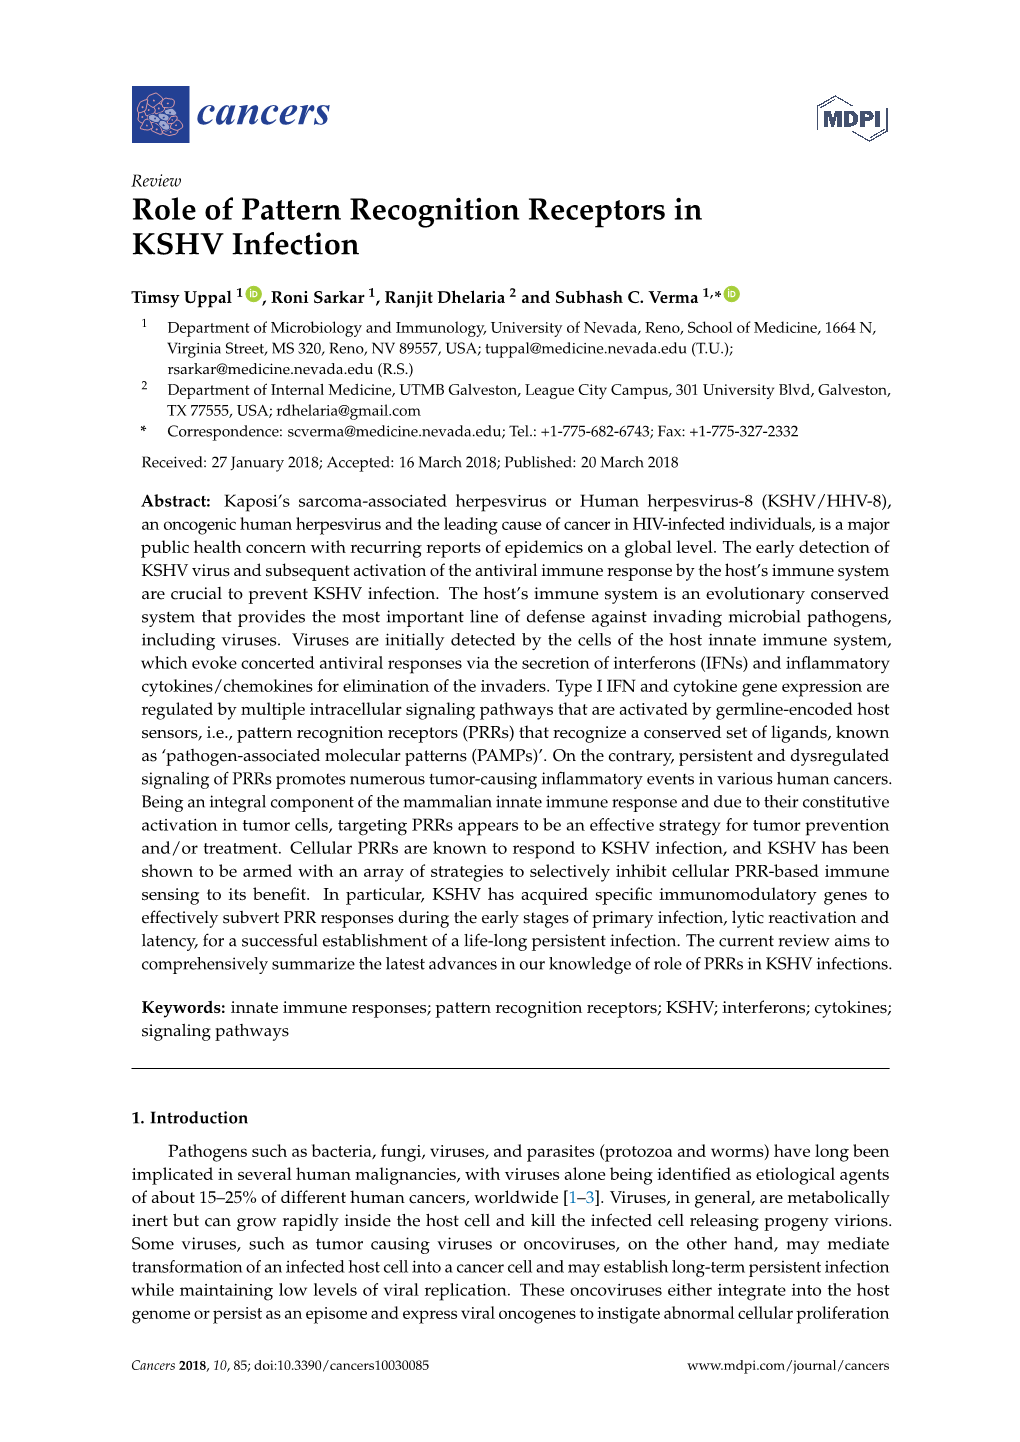 Role of Pattern Recognition Receptors in KSHV Infection